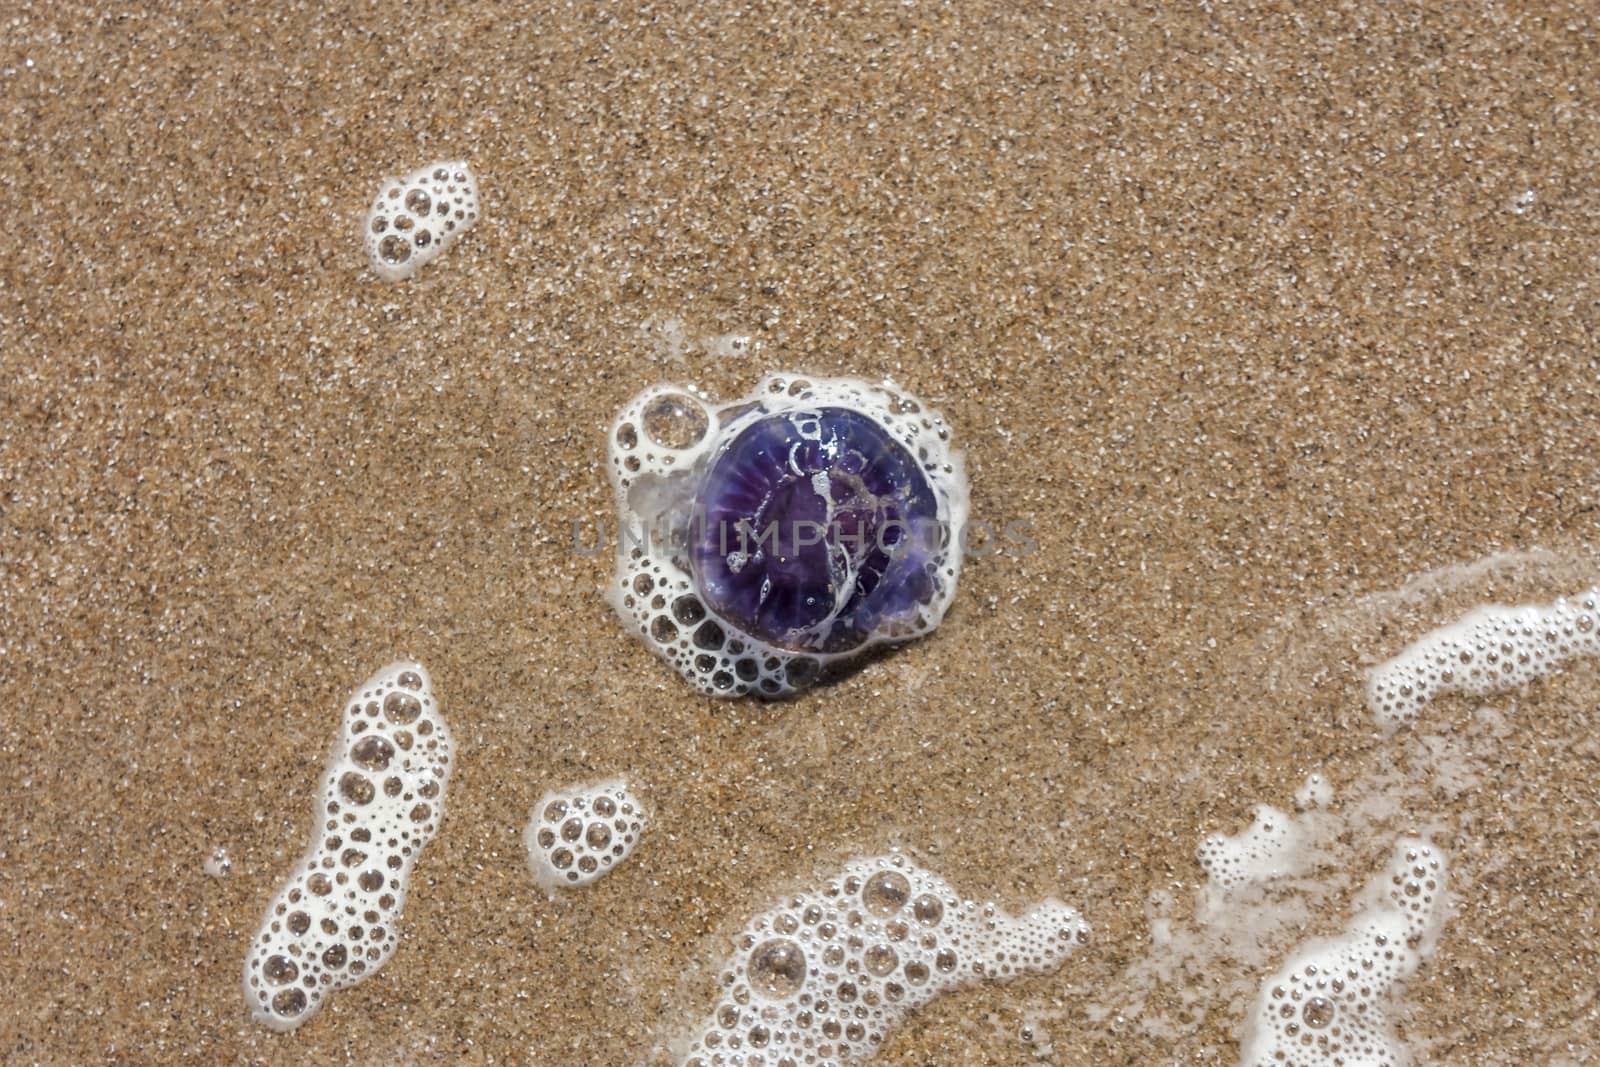 blue jellyfish on the sandy beach by Tetyana